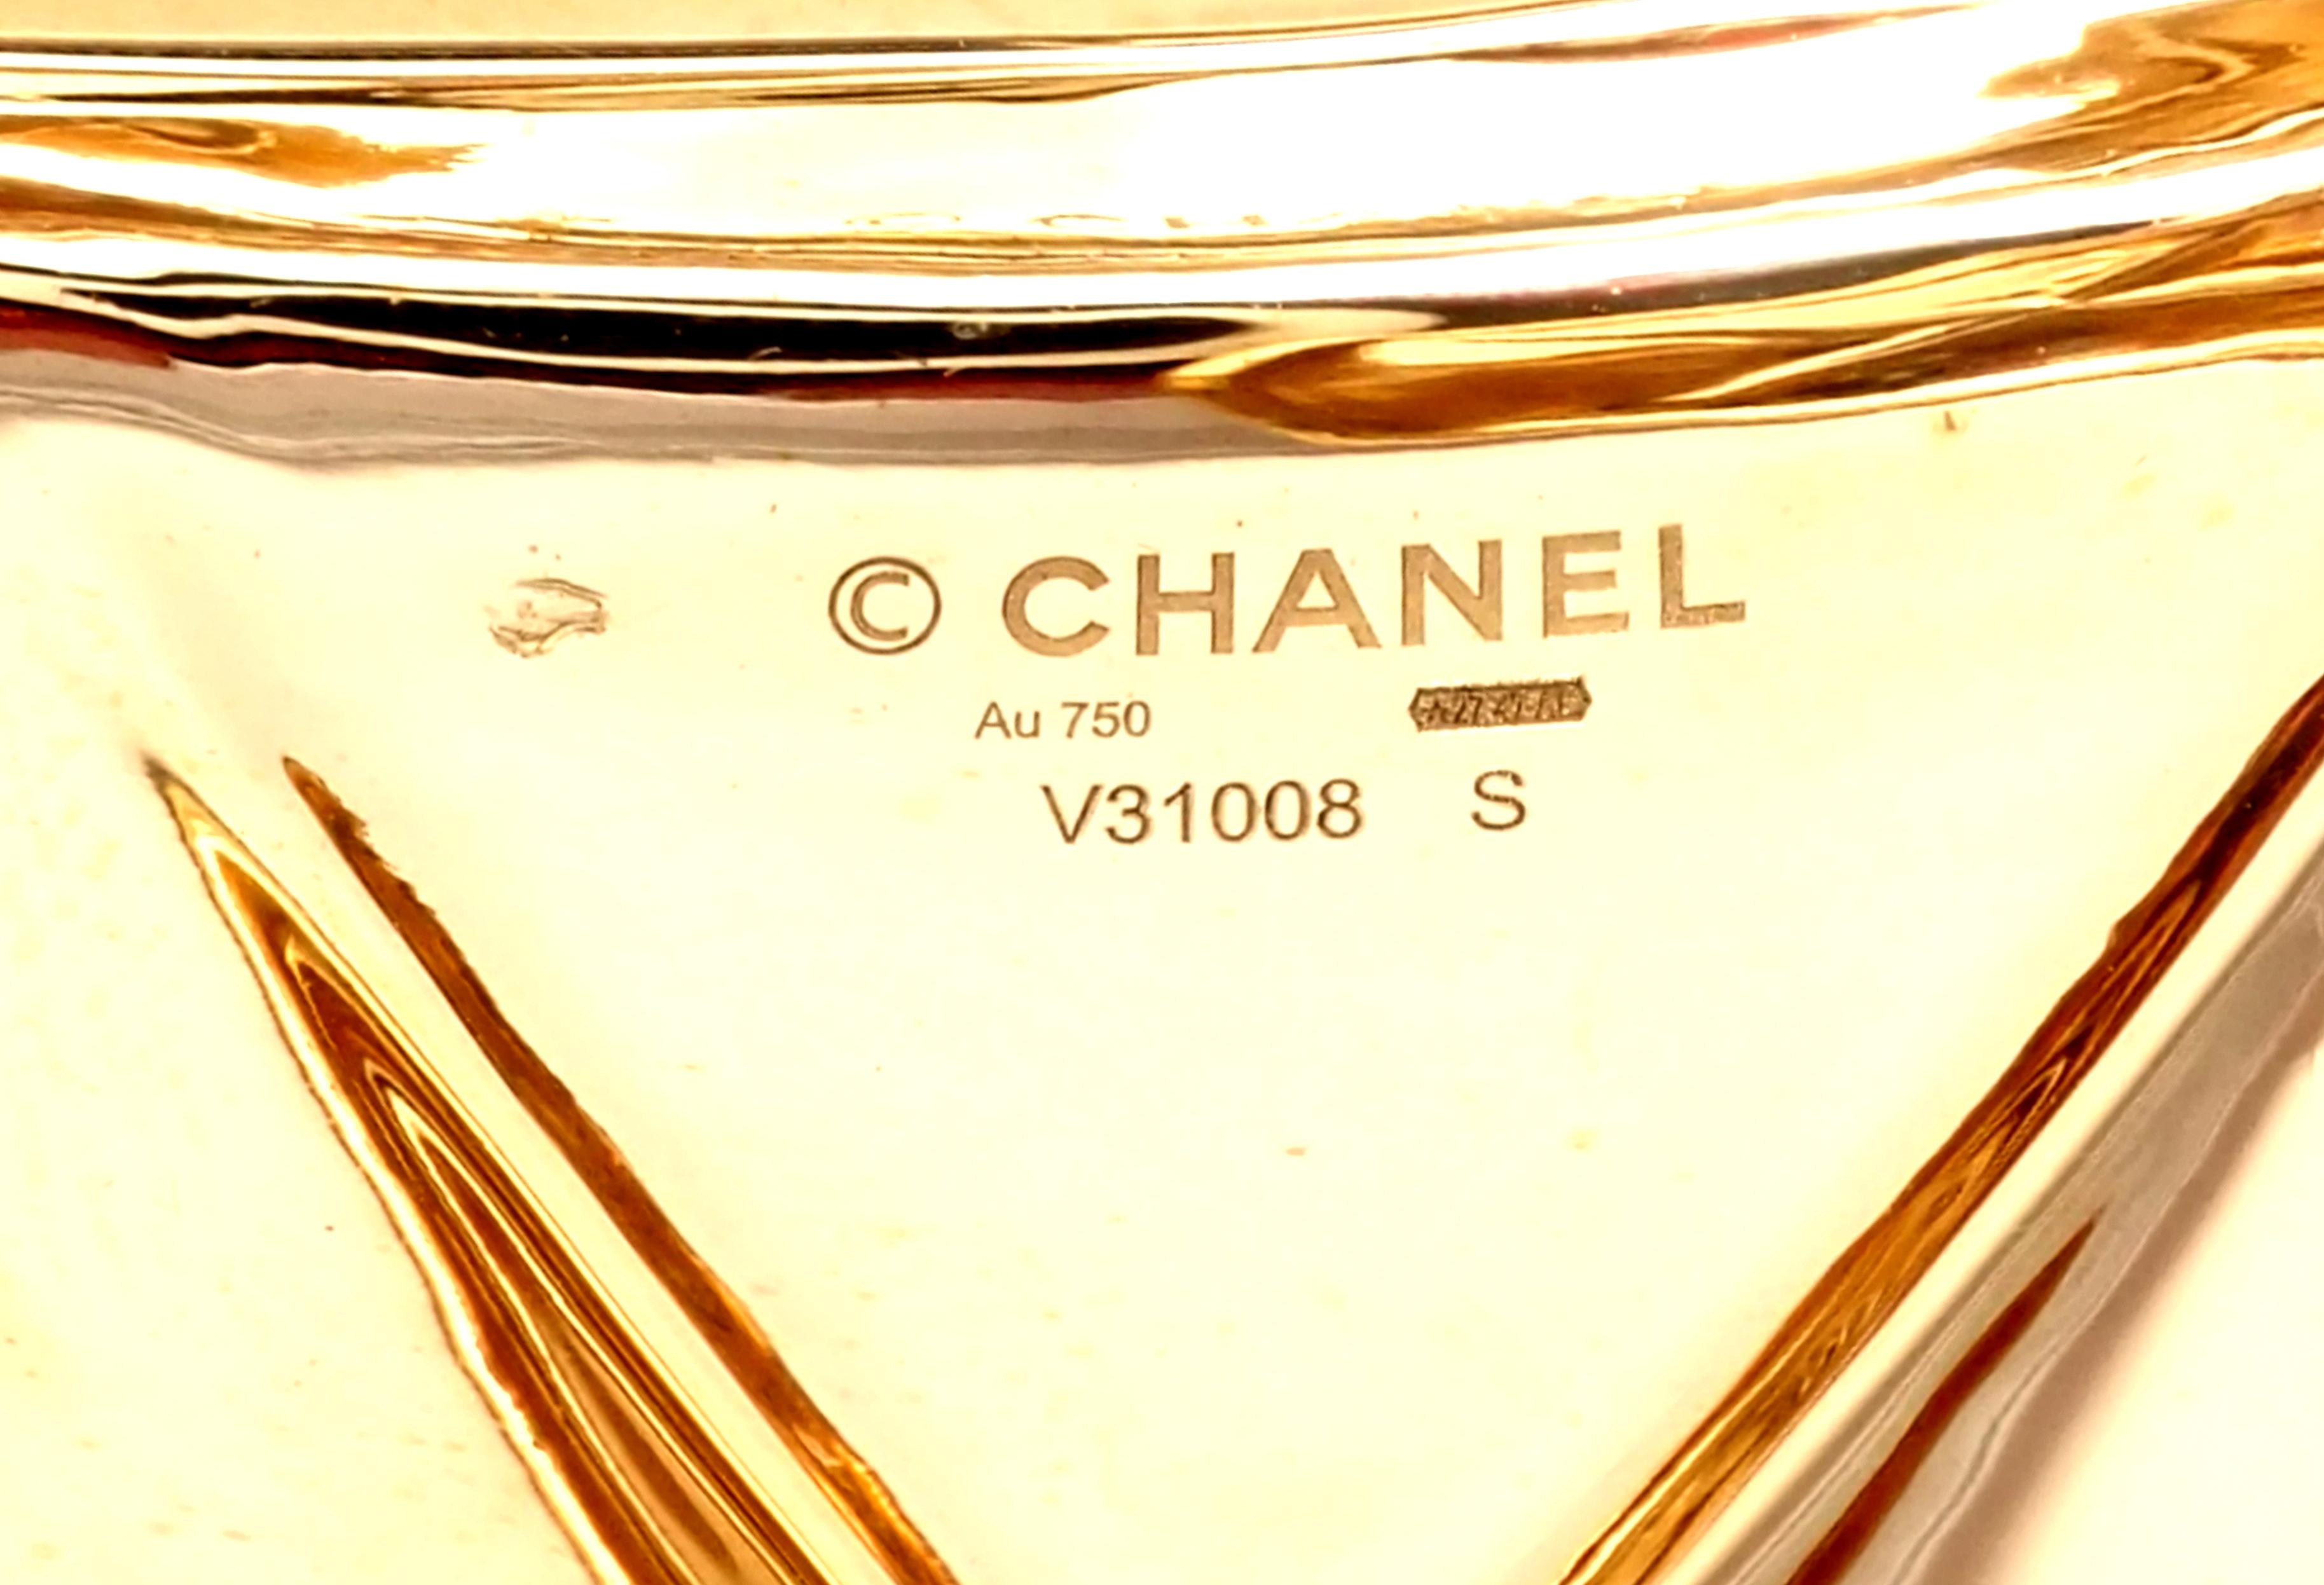 Chanel Coco Crush Yellow Gold Cuff Bangle Bracelet 6